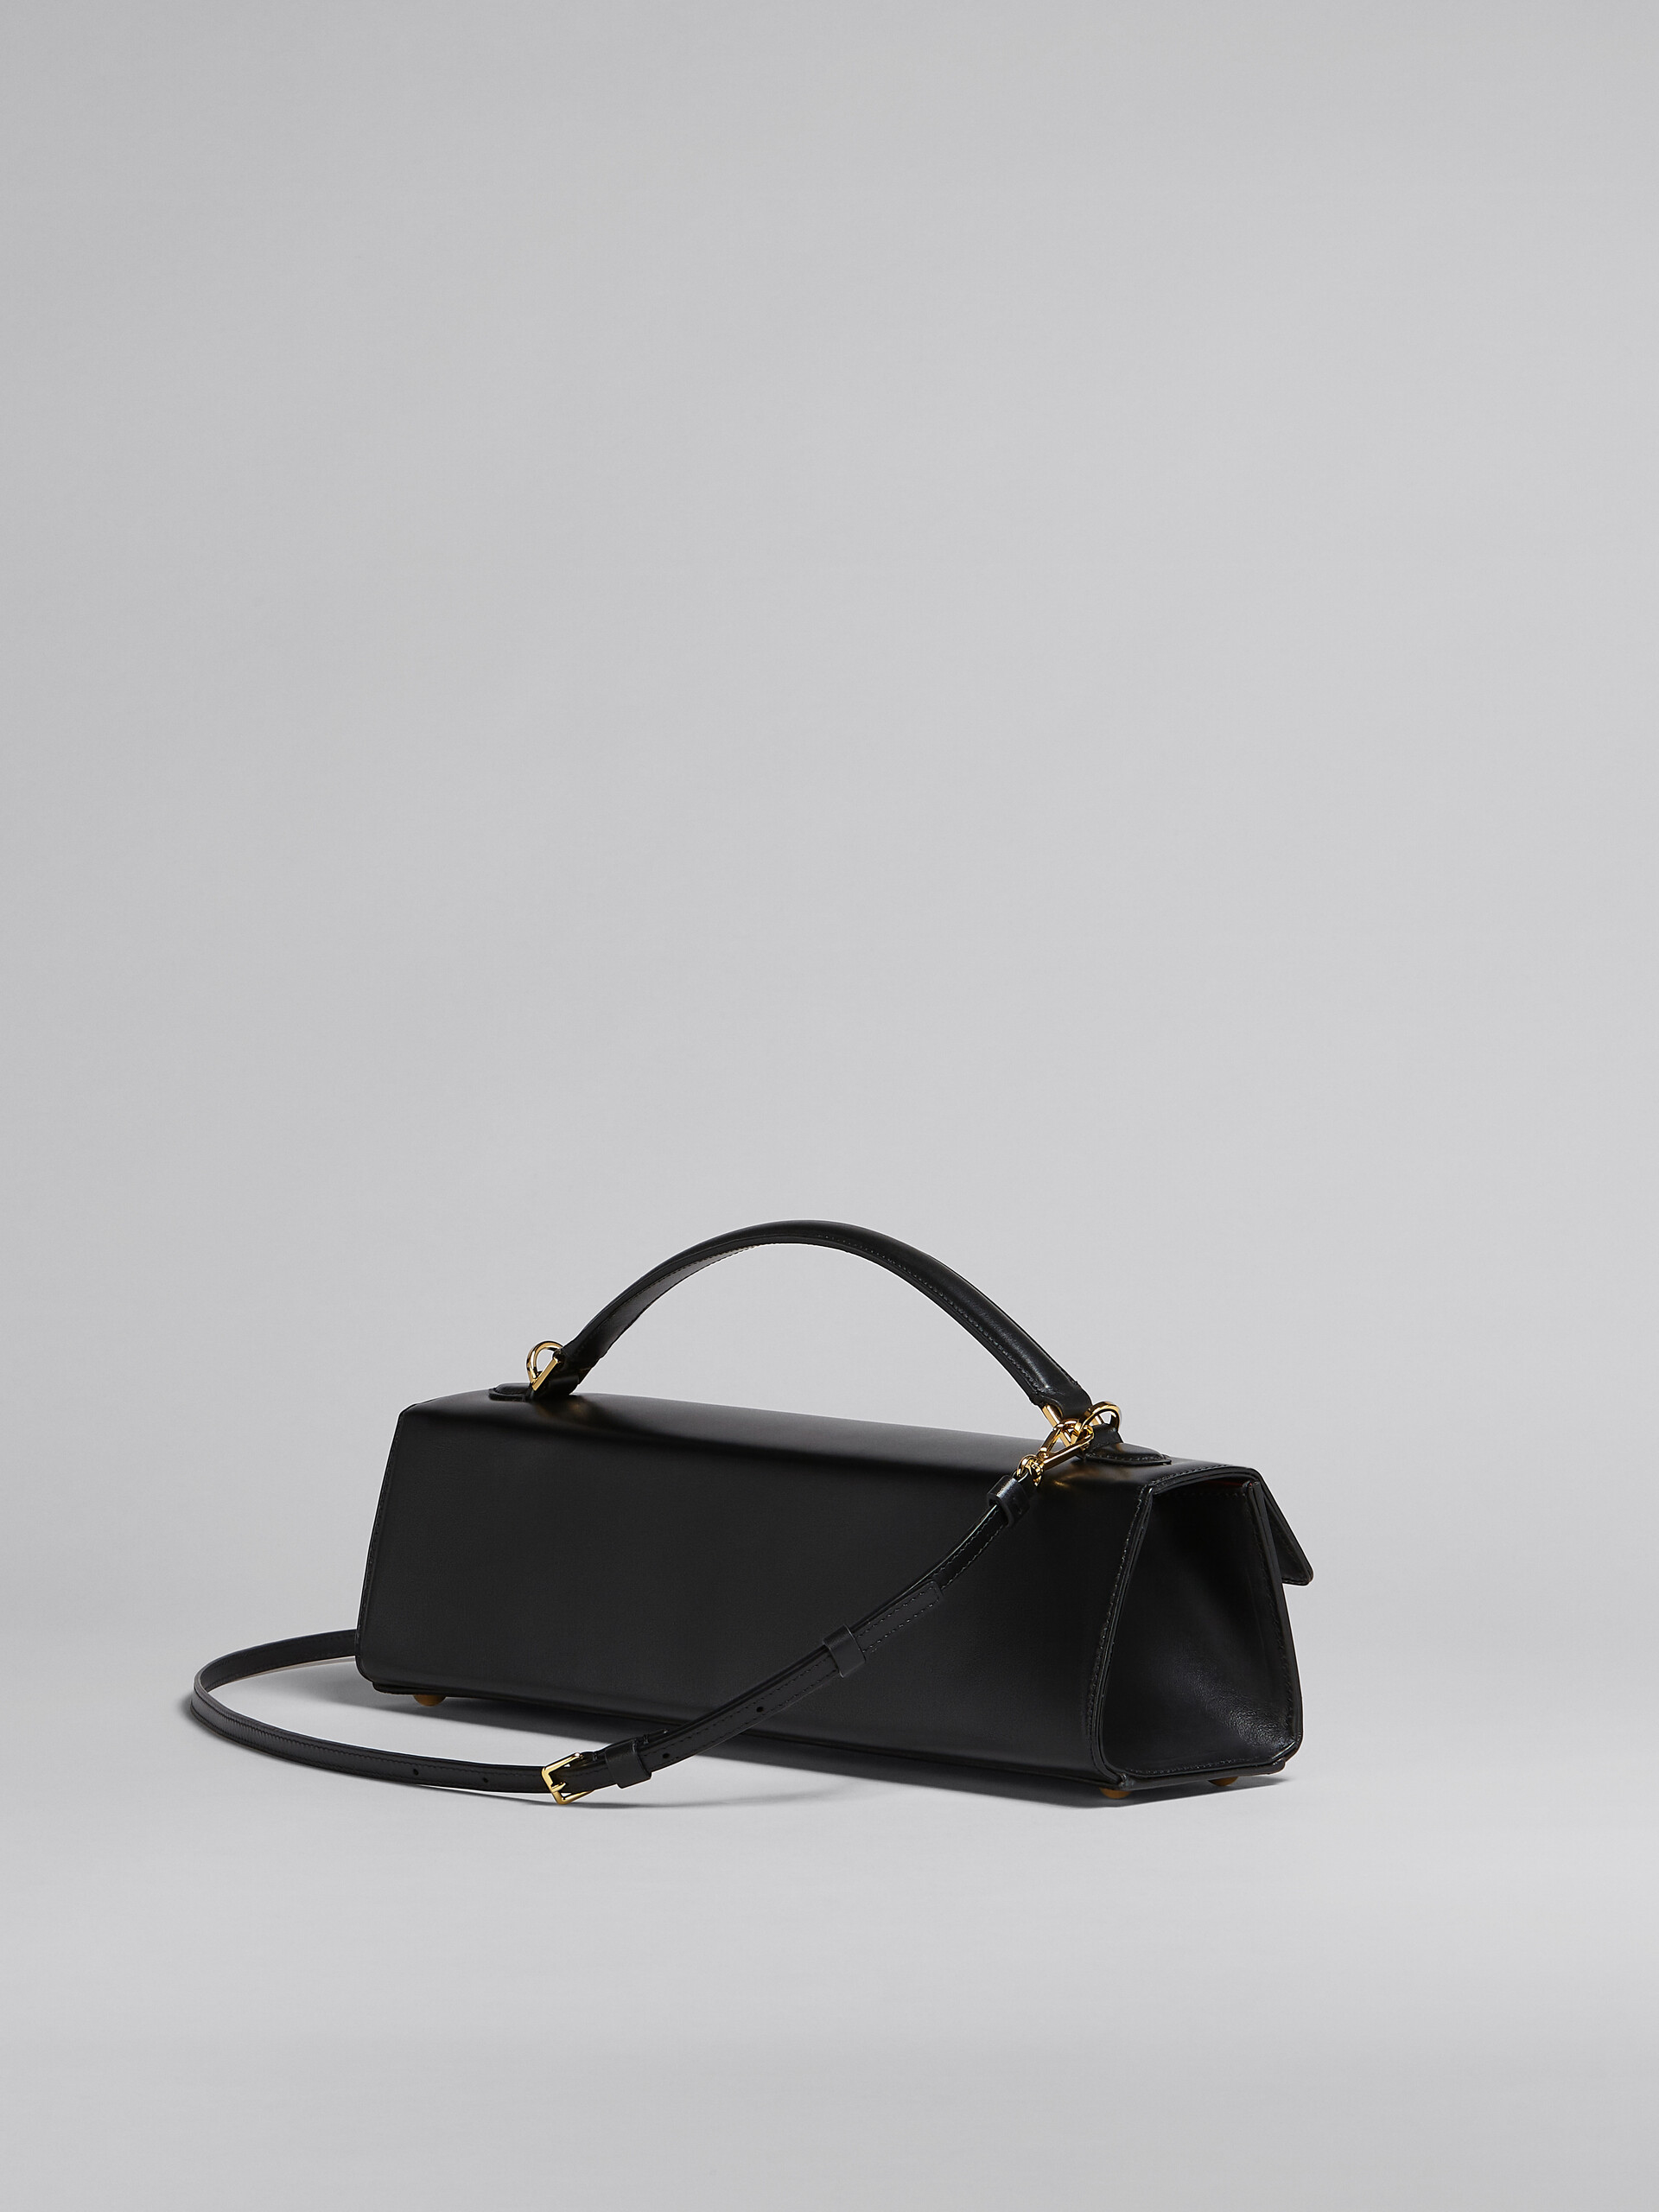 Relativity Large Bag in black leather - Handbags - Image 3